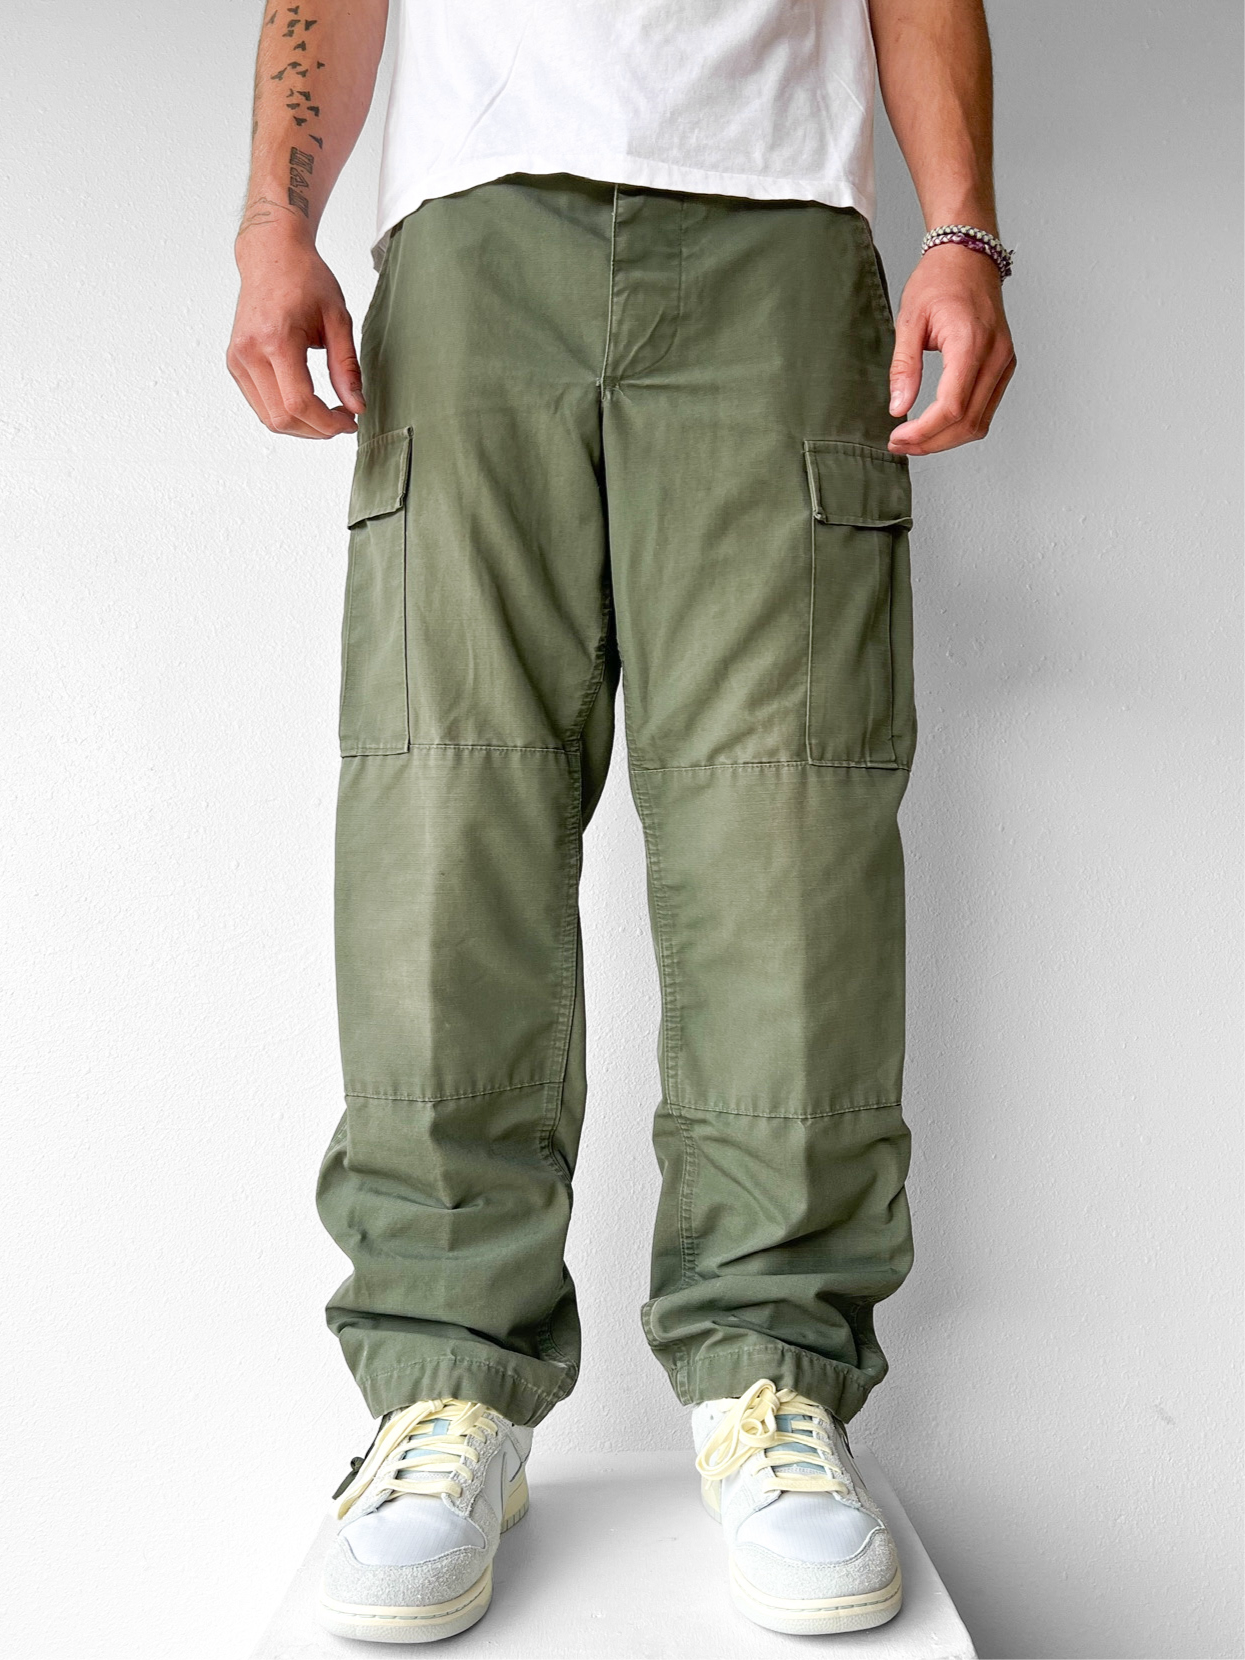 Military Field Cargo Pants - 30 x 30